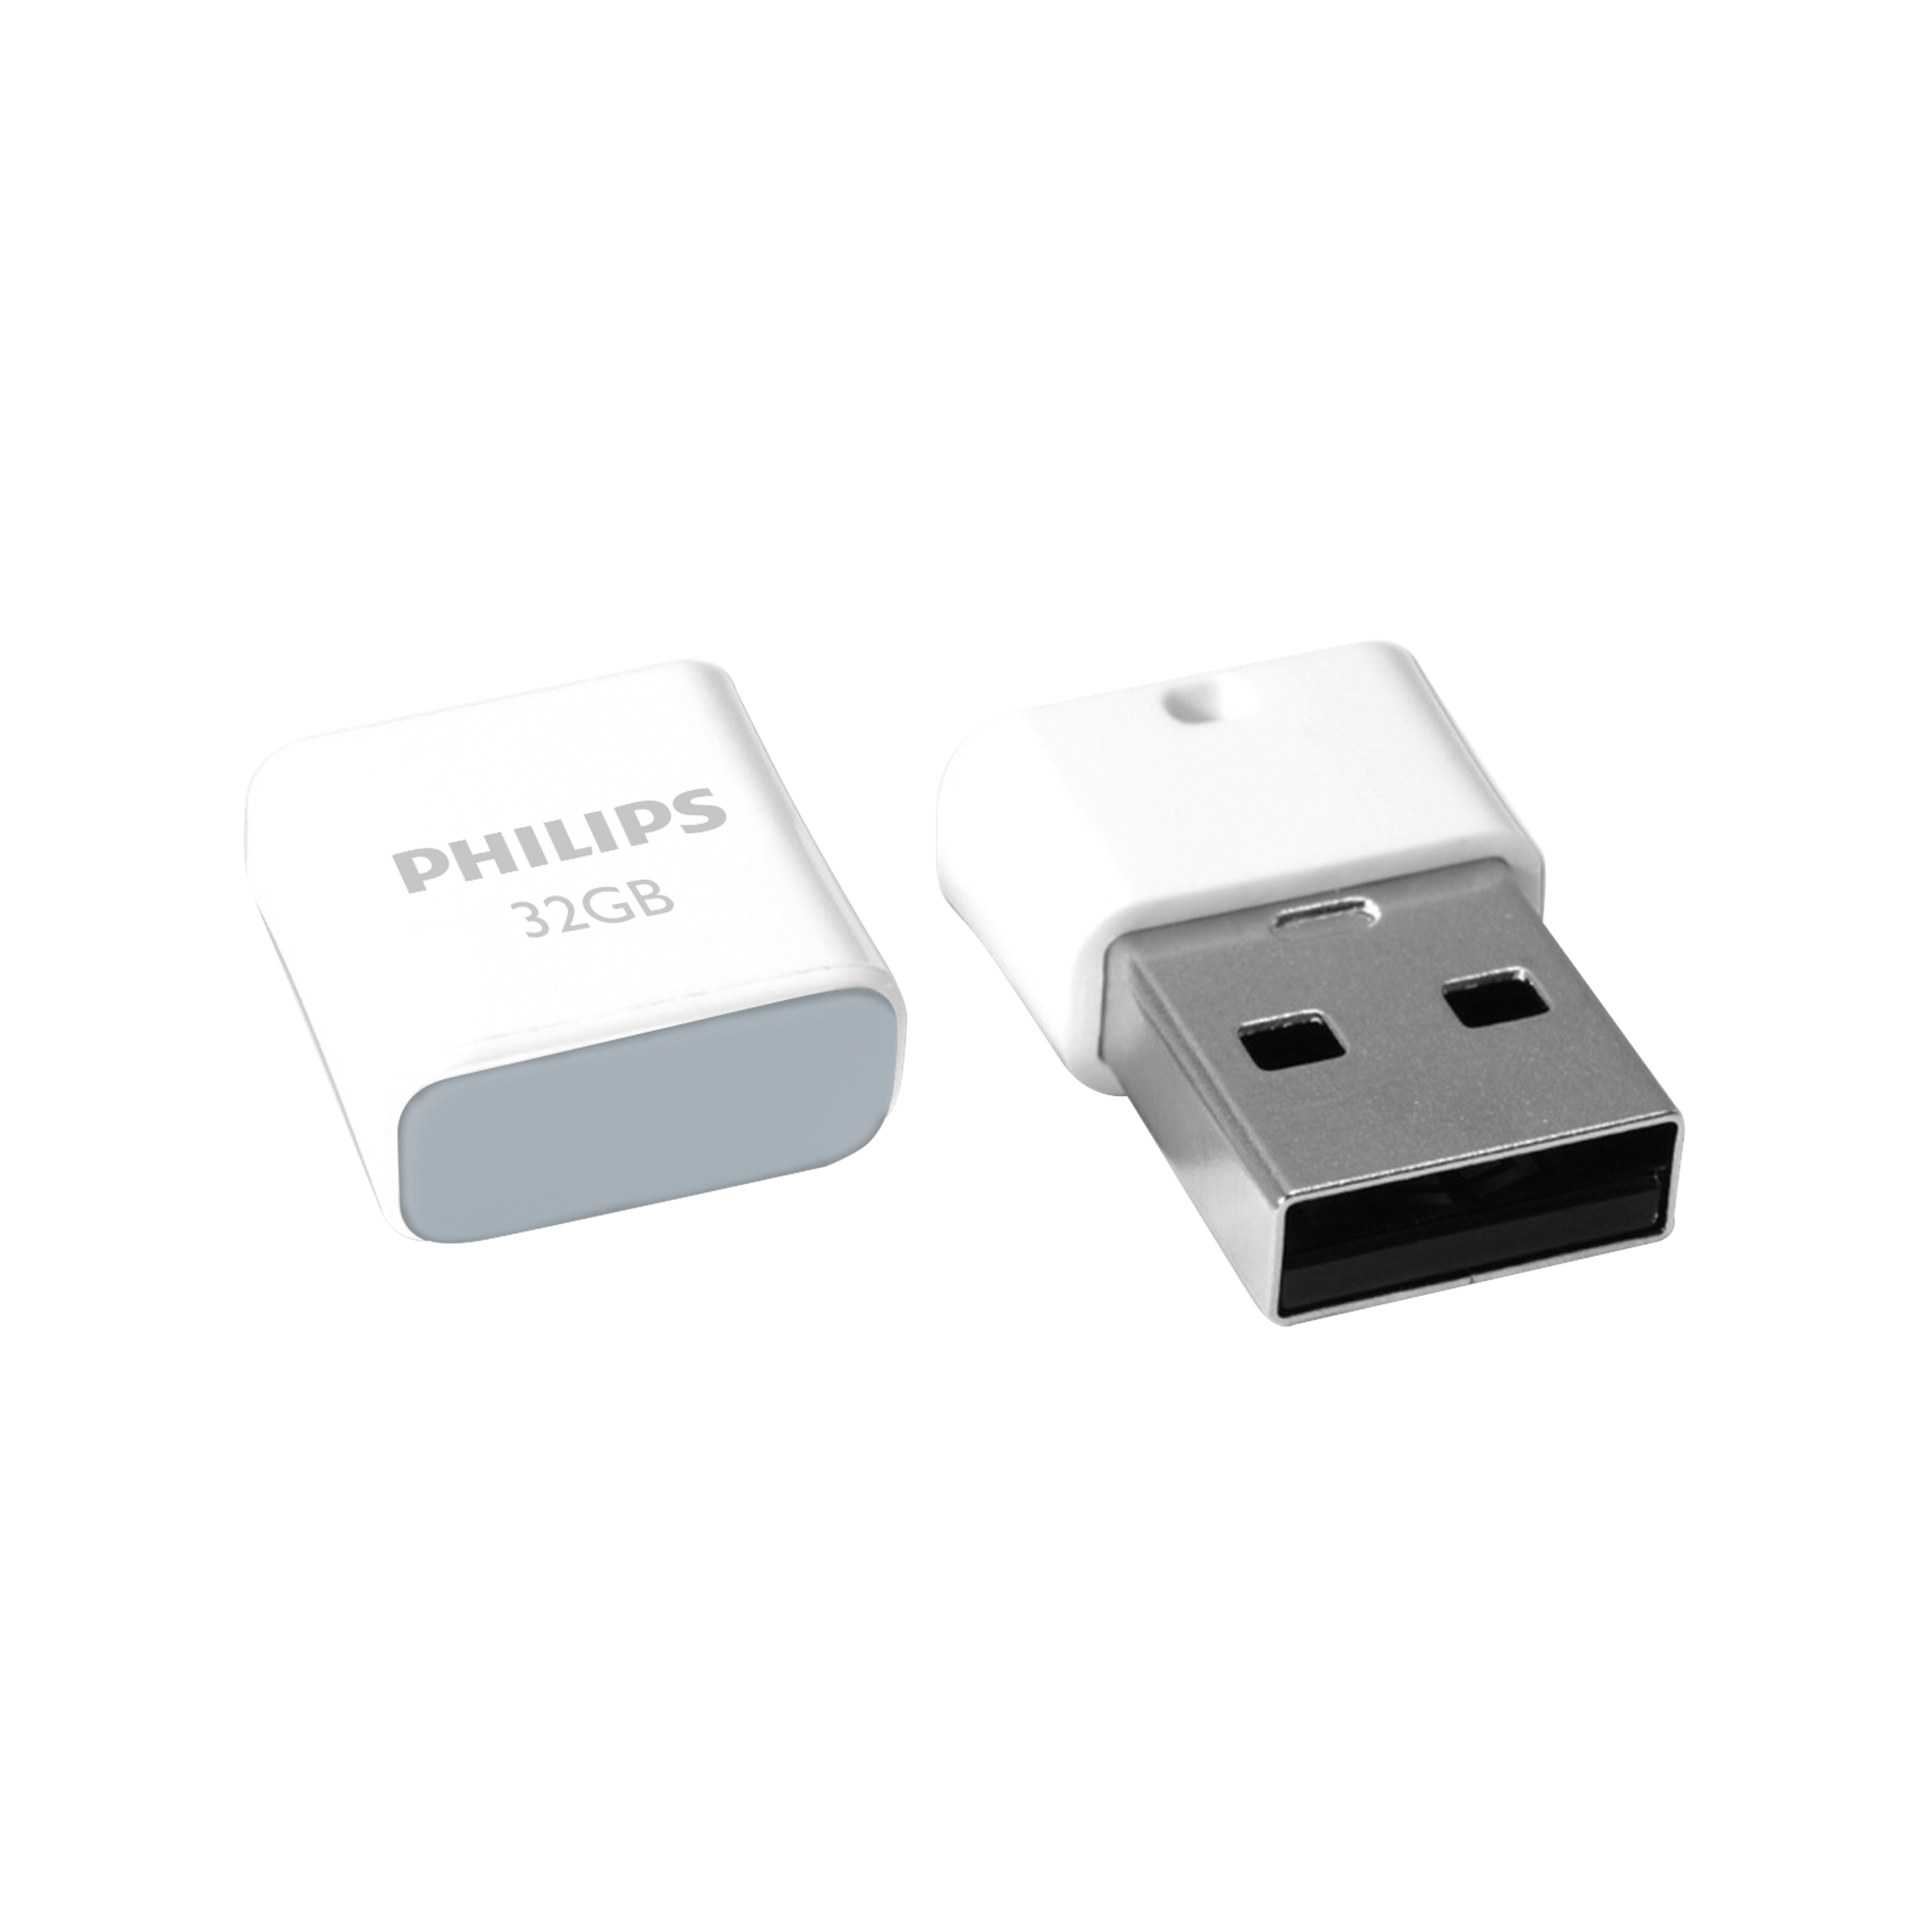 PHILIPS Pico Edition USB-Stick (Weiß, 32 GB)